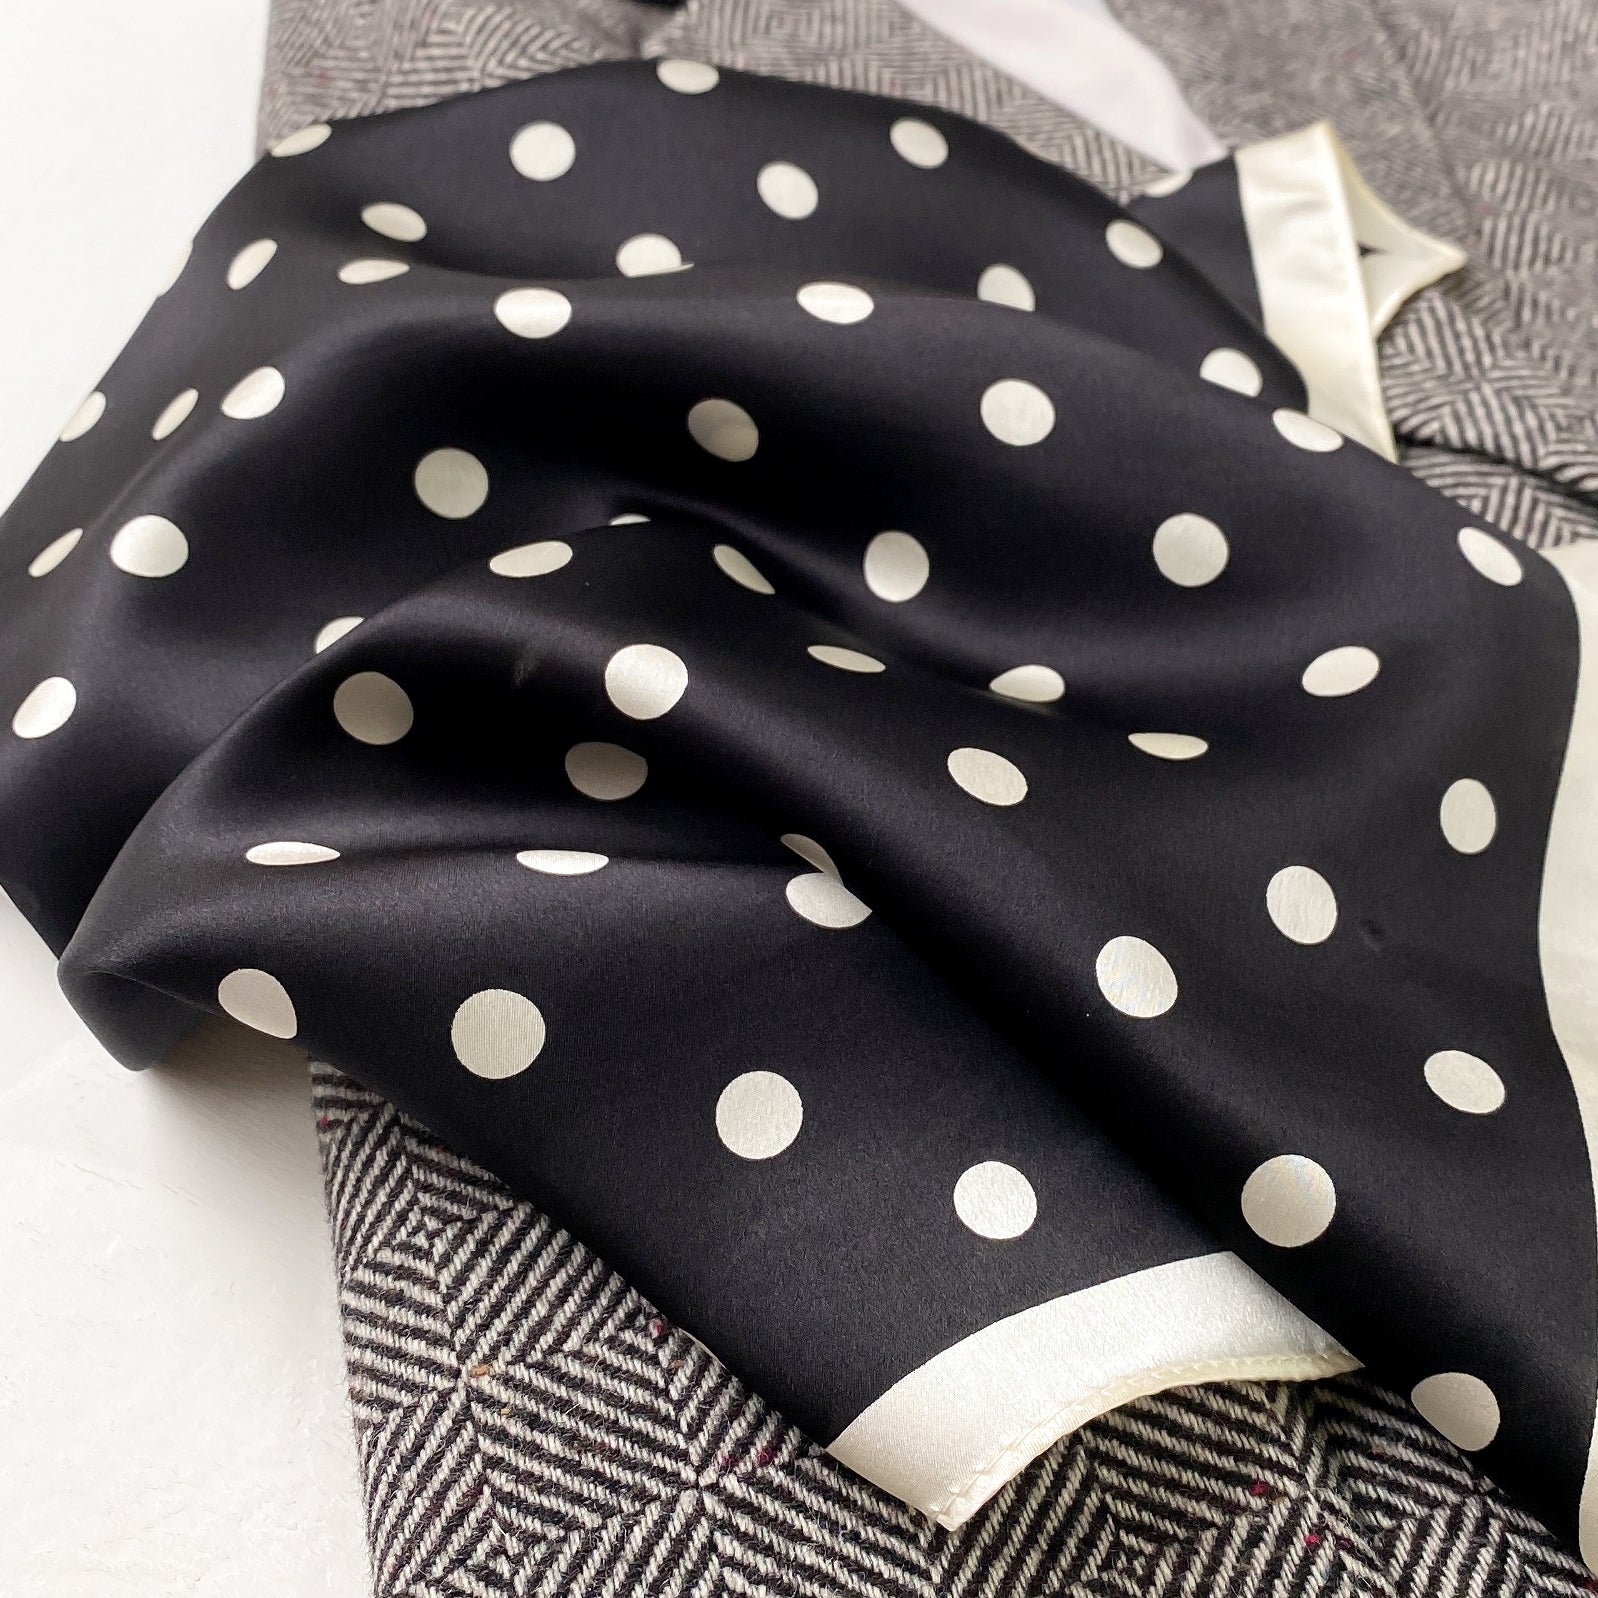 a black small silk scarf/neckerchief with polka dot pattern